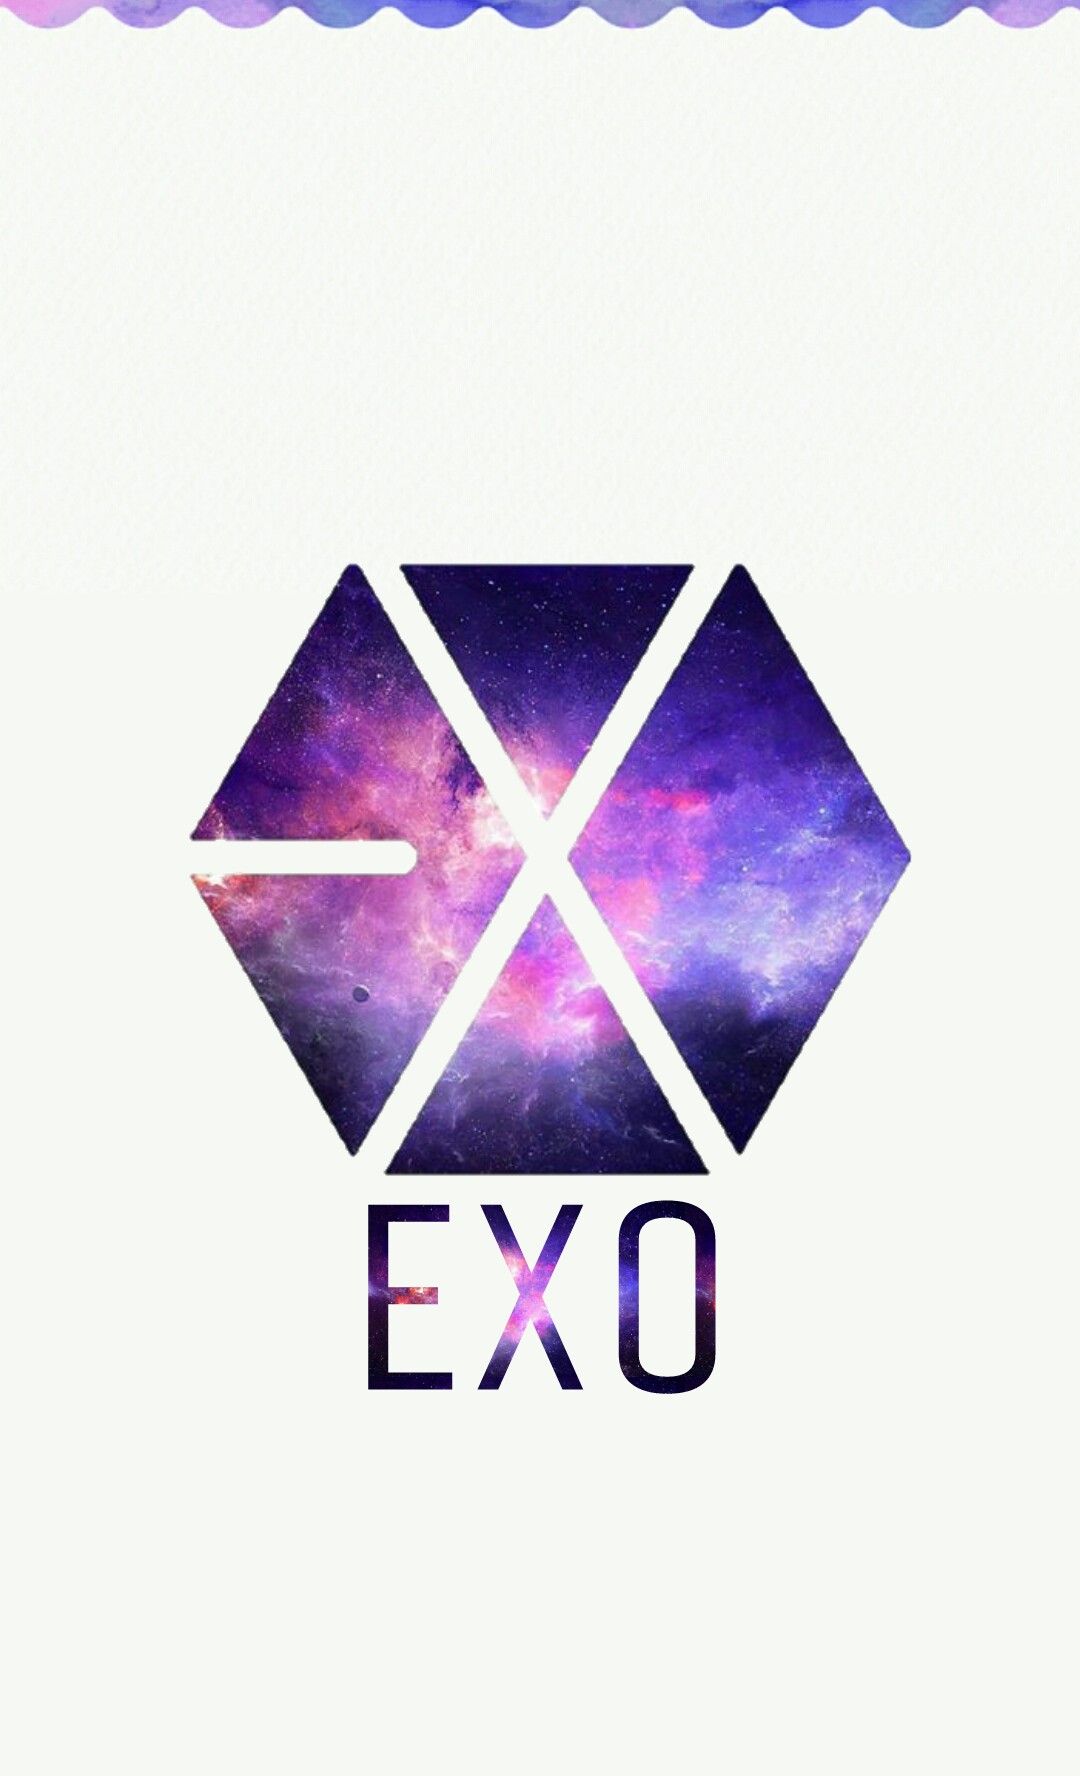 Exo Logo Wallpaper Hd